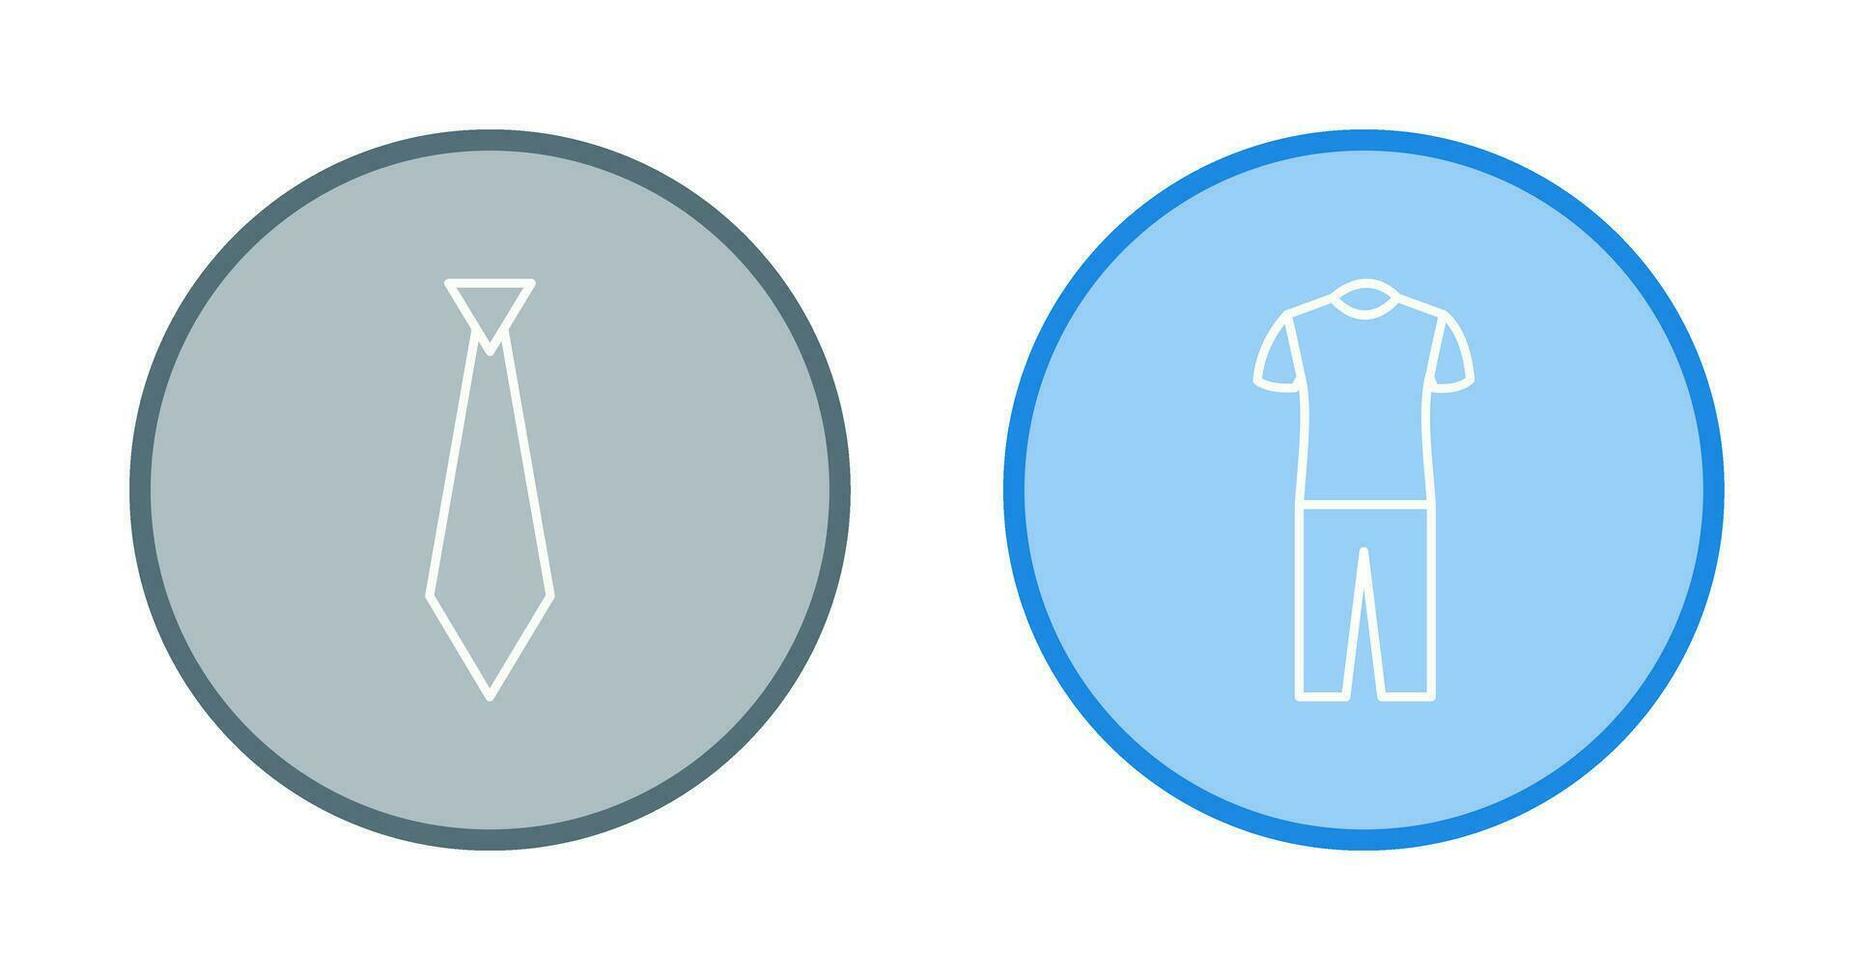 Krawatte und Pyjama Symbol vektor